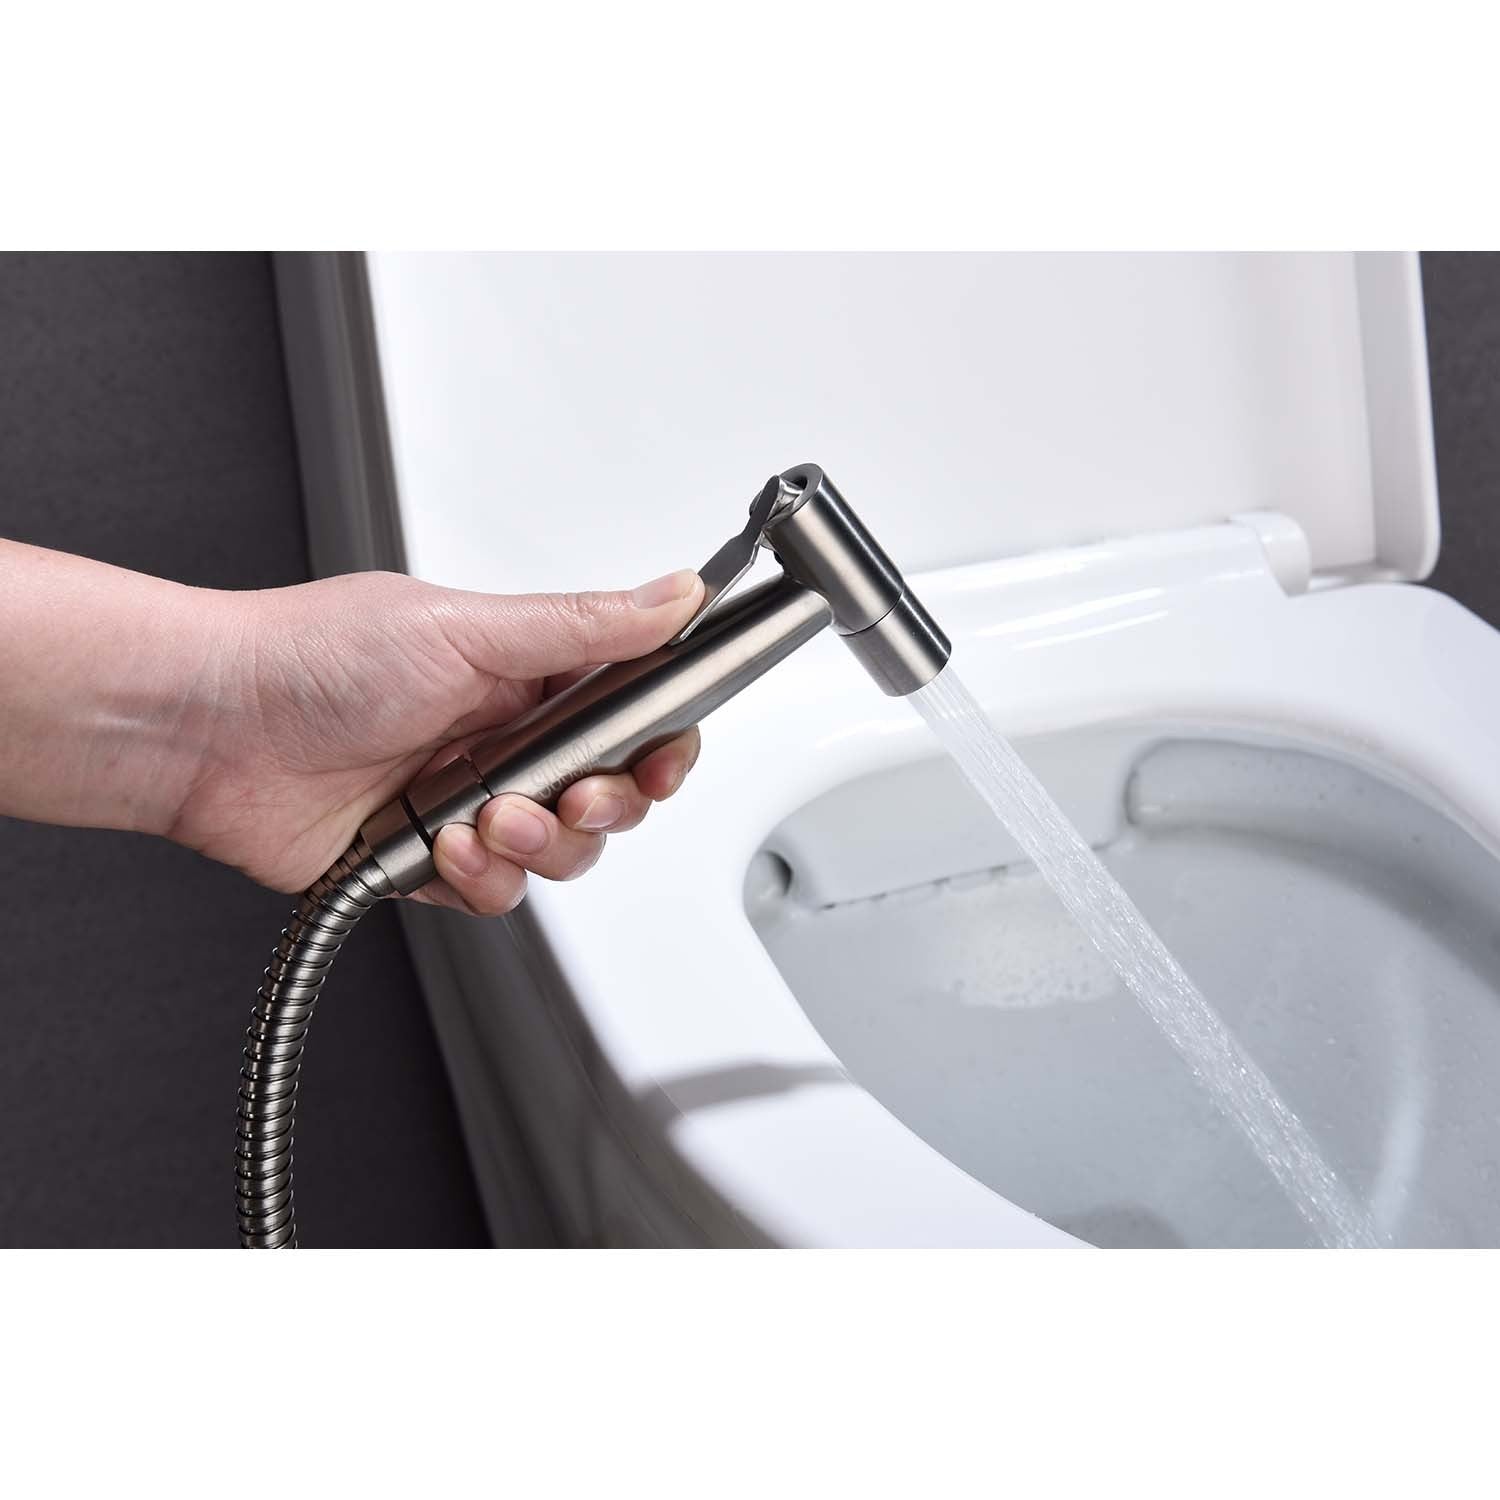 Bidet Sprayer for Toilet, Handheld Cloth Diaper silver-metal